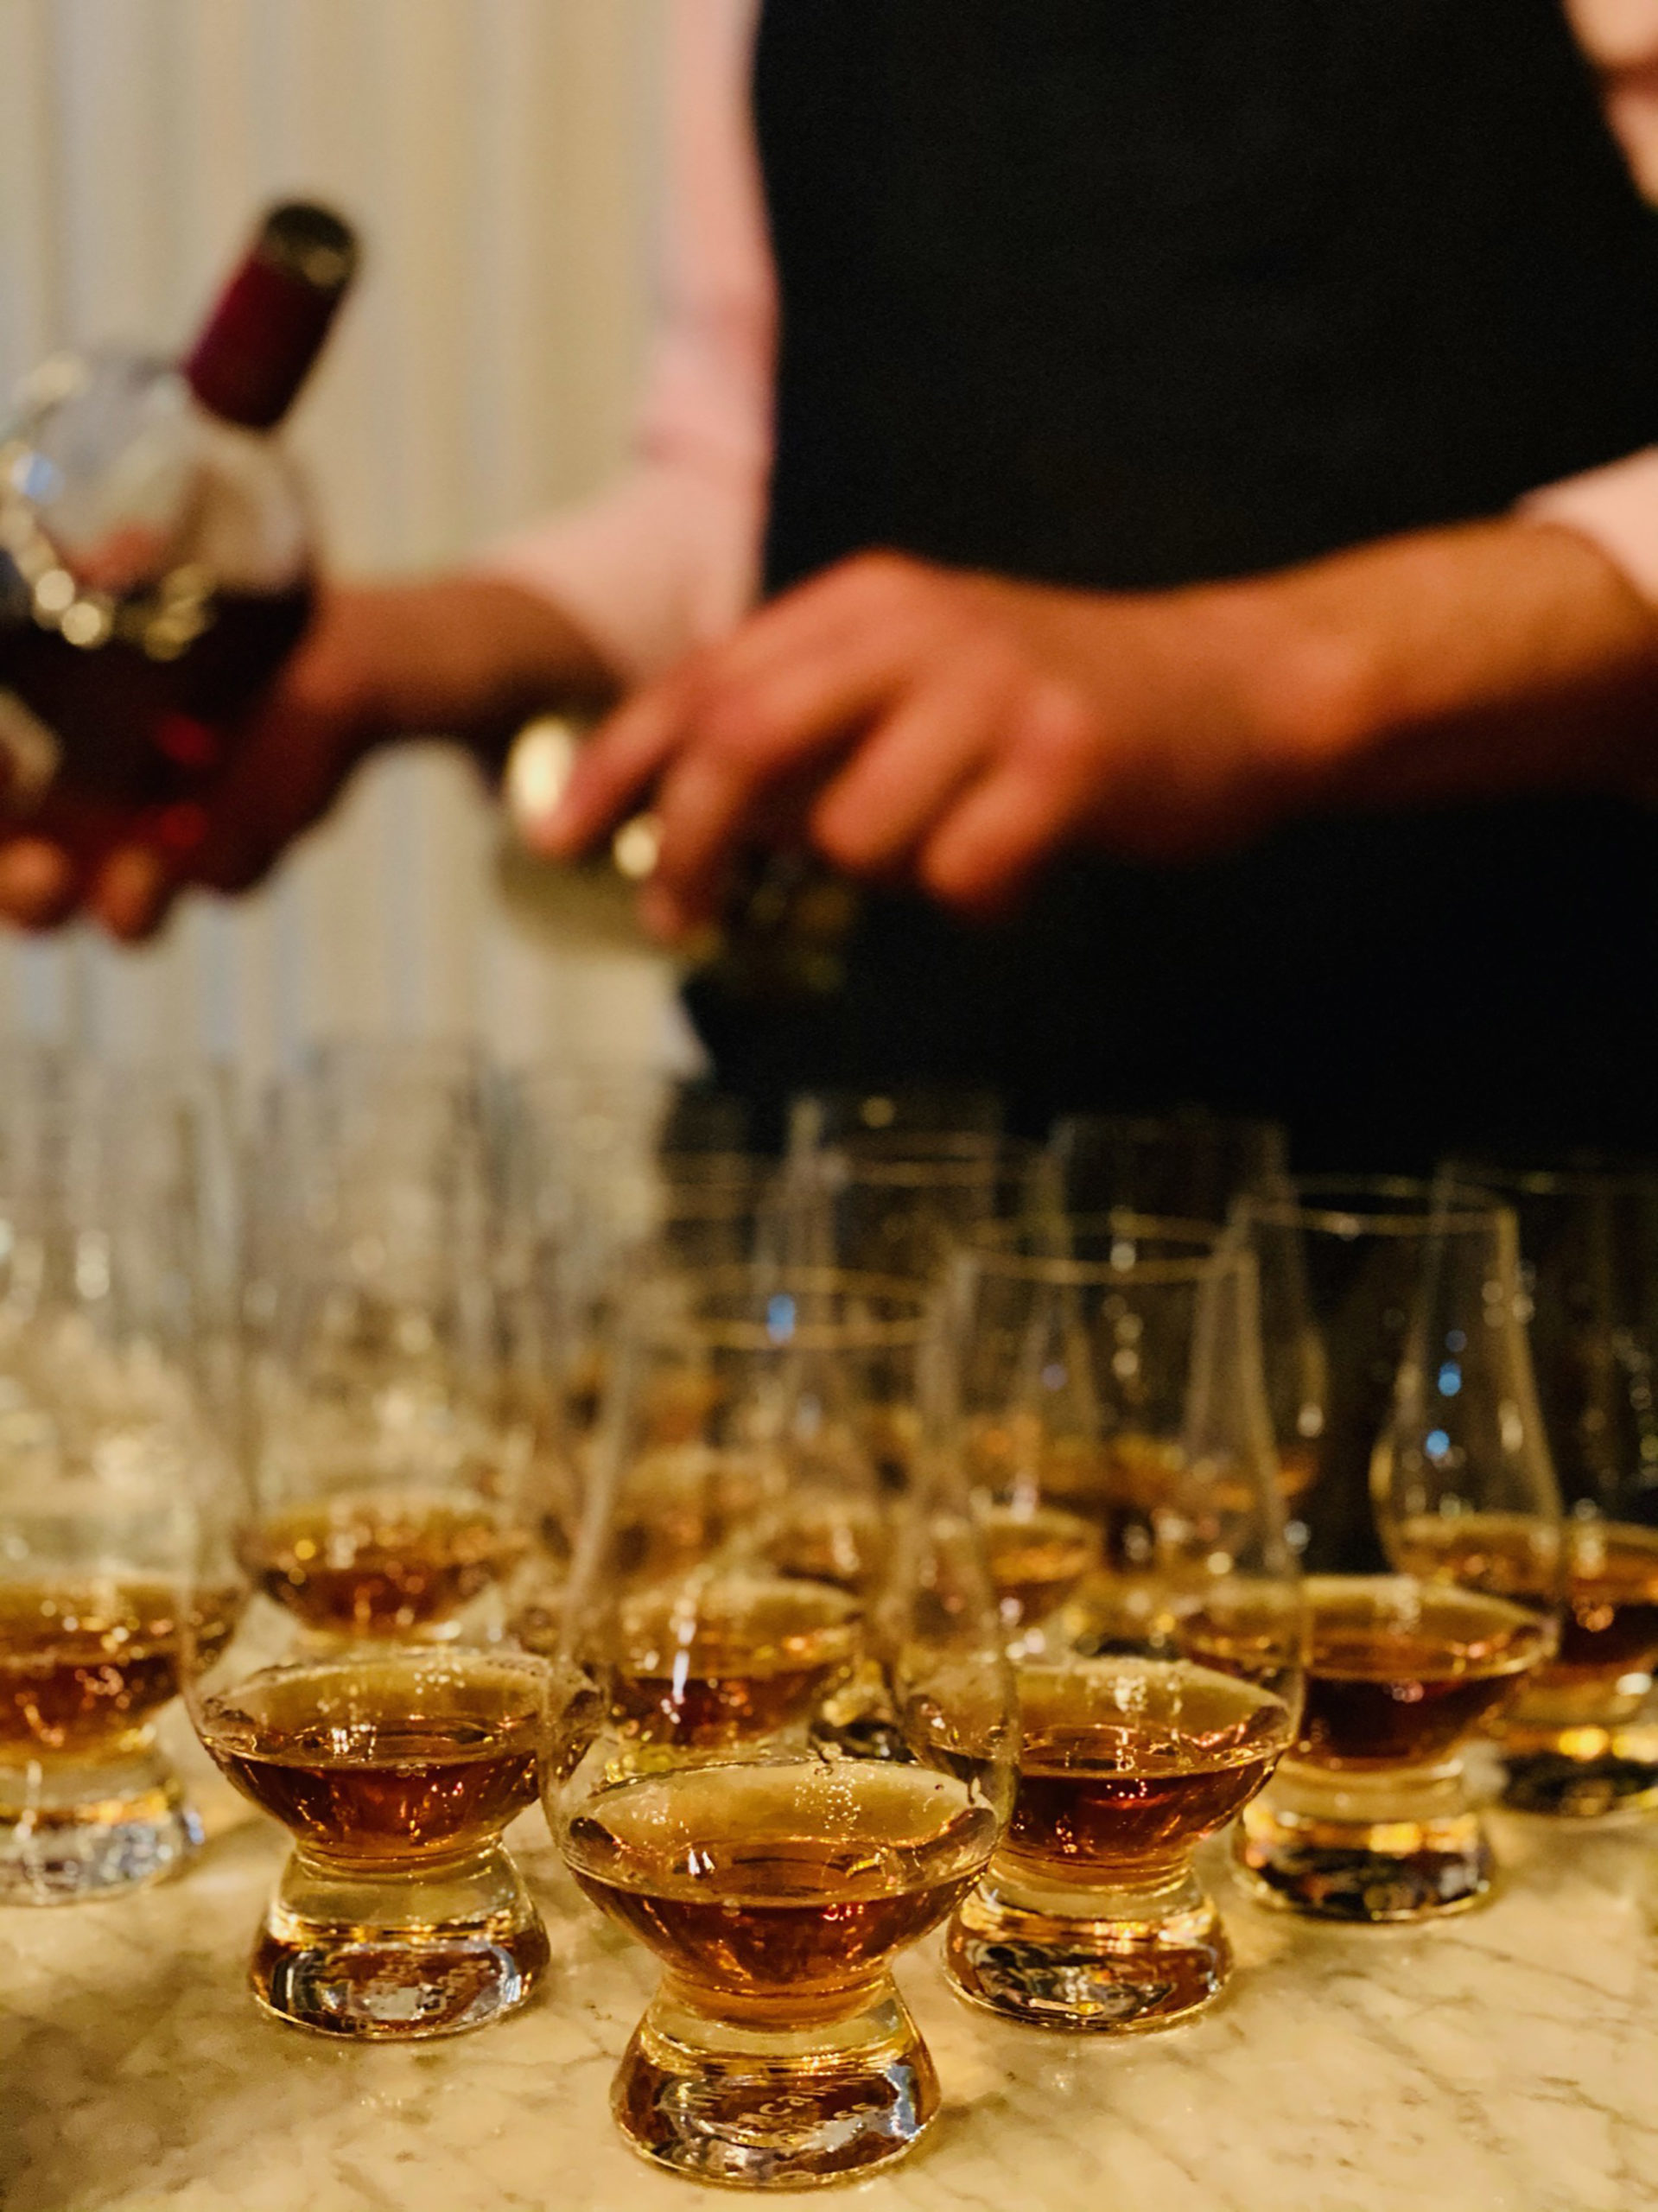 bartender hands pouring dalmore into smaller whisky tasting glasses